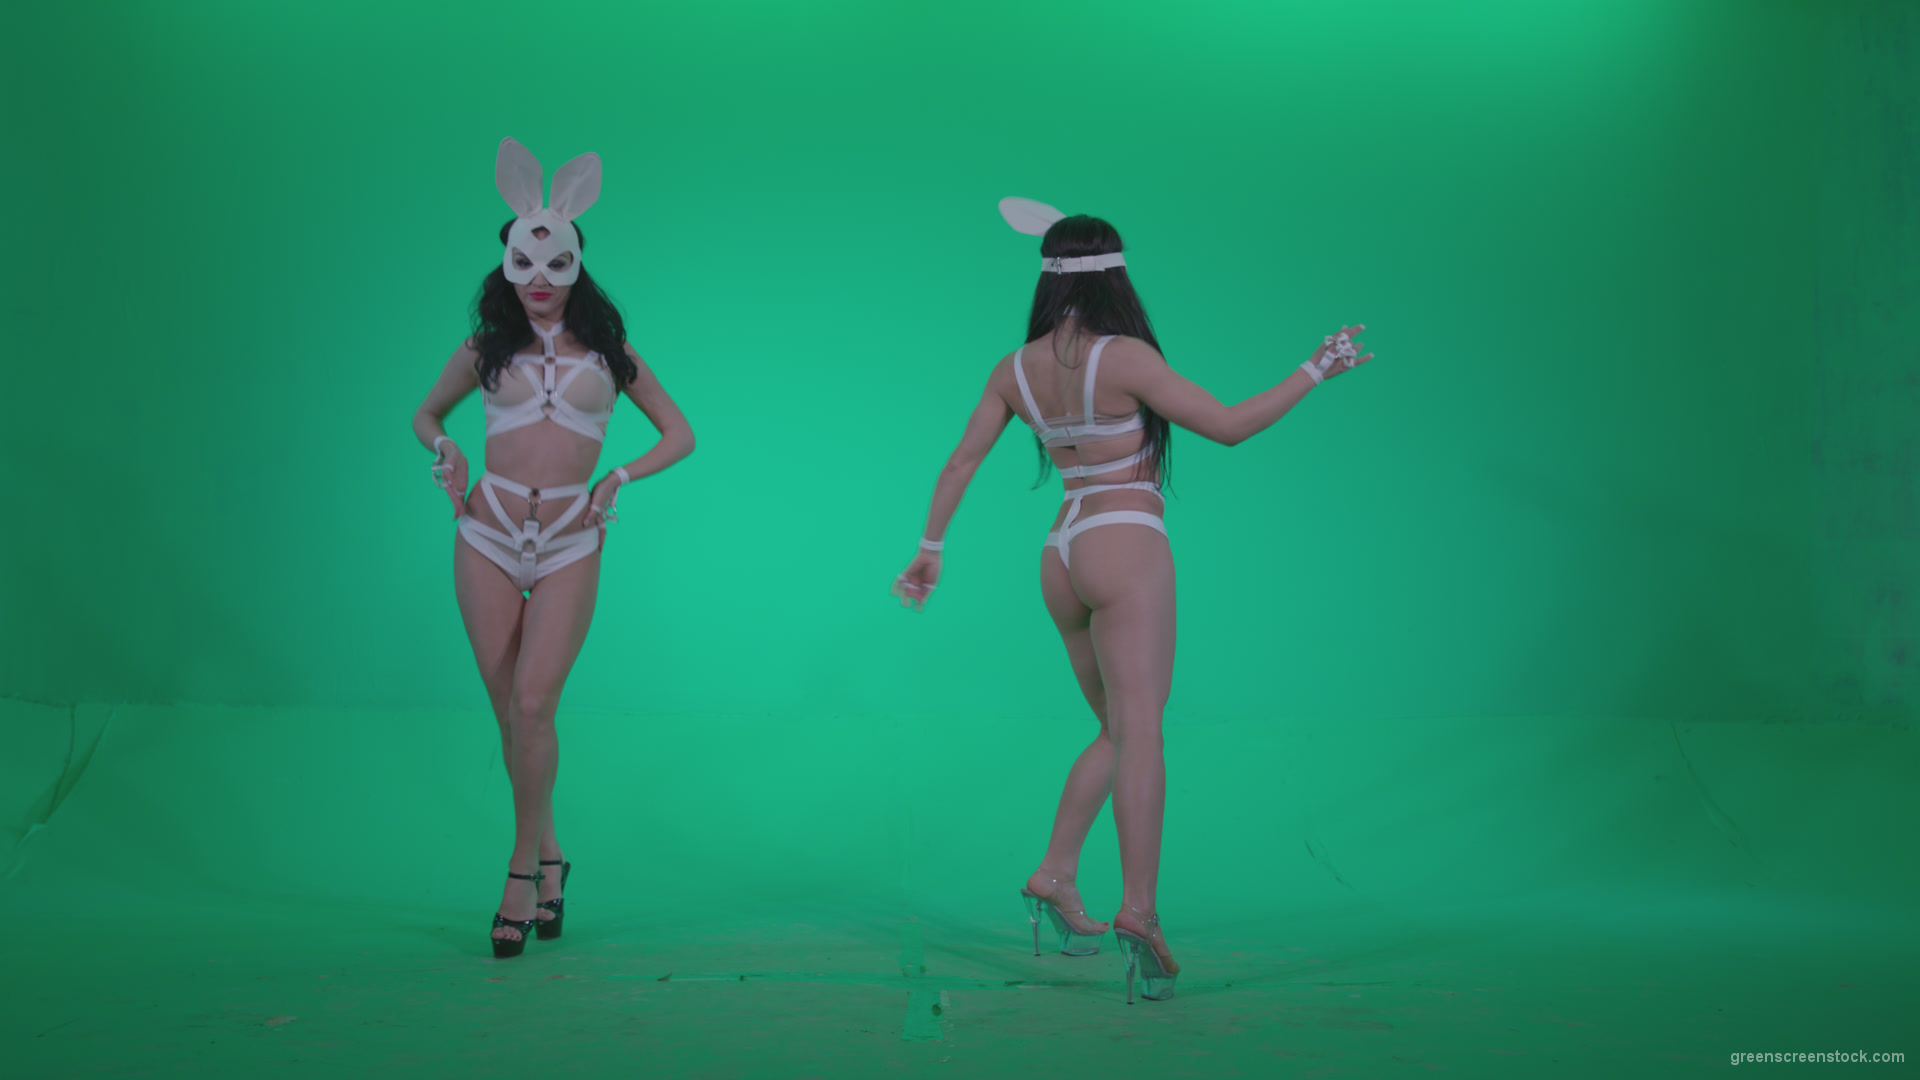 Go-go-Dancer-White-Rabbit-m1-Green-Screen-Video-Footage_004 Green Screen Stock